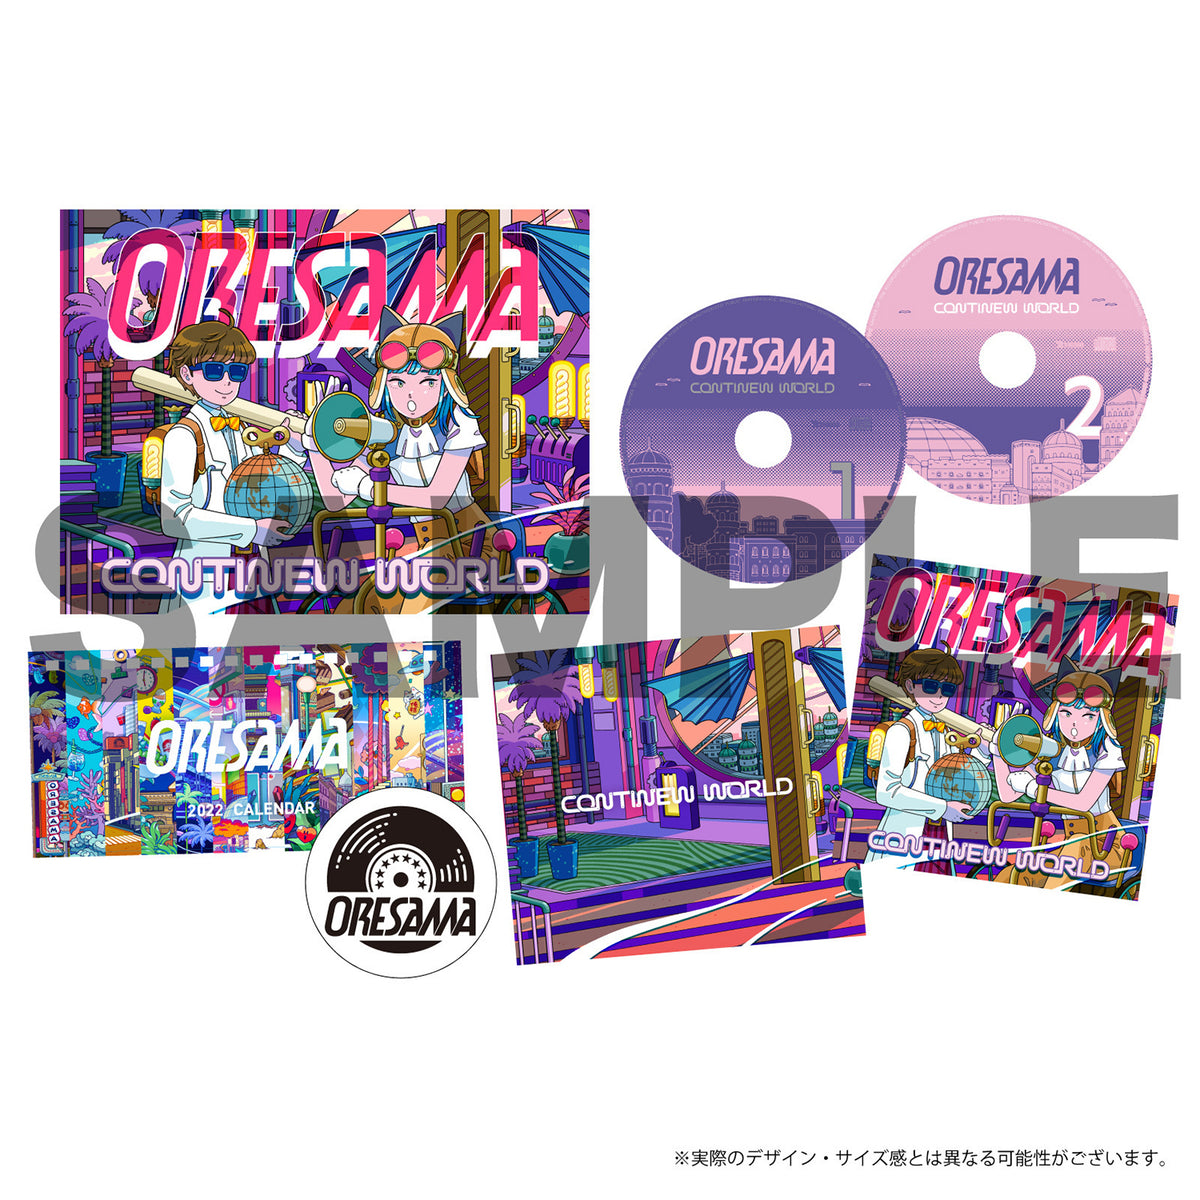 【ORESAMA】3rd ALBUM「CONTINEW WORLD」